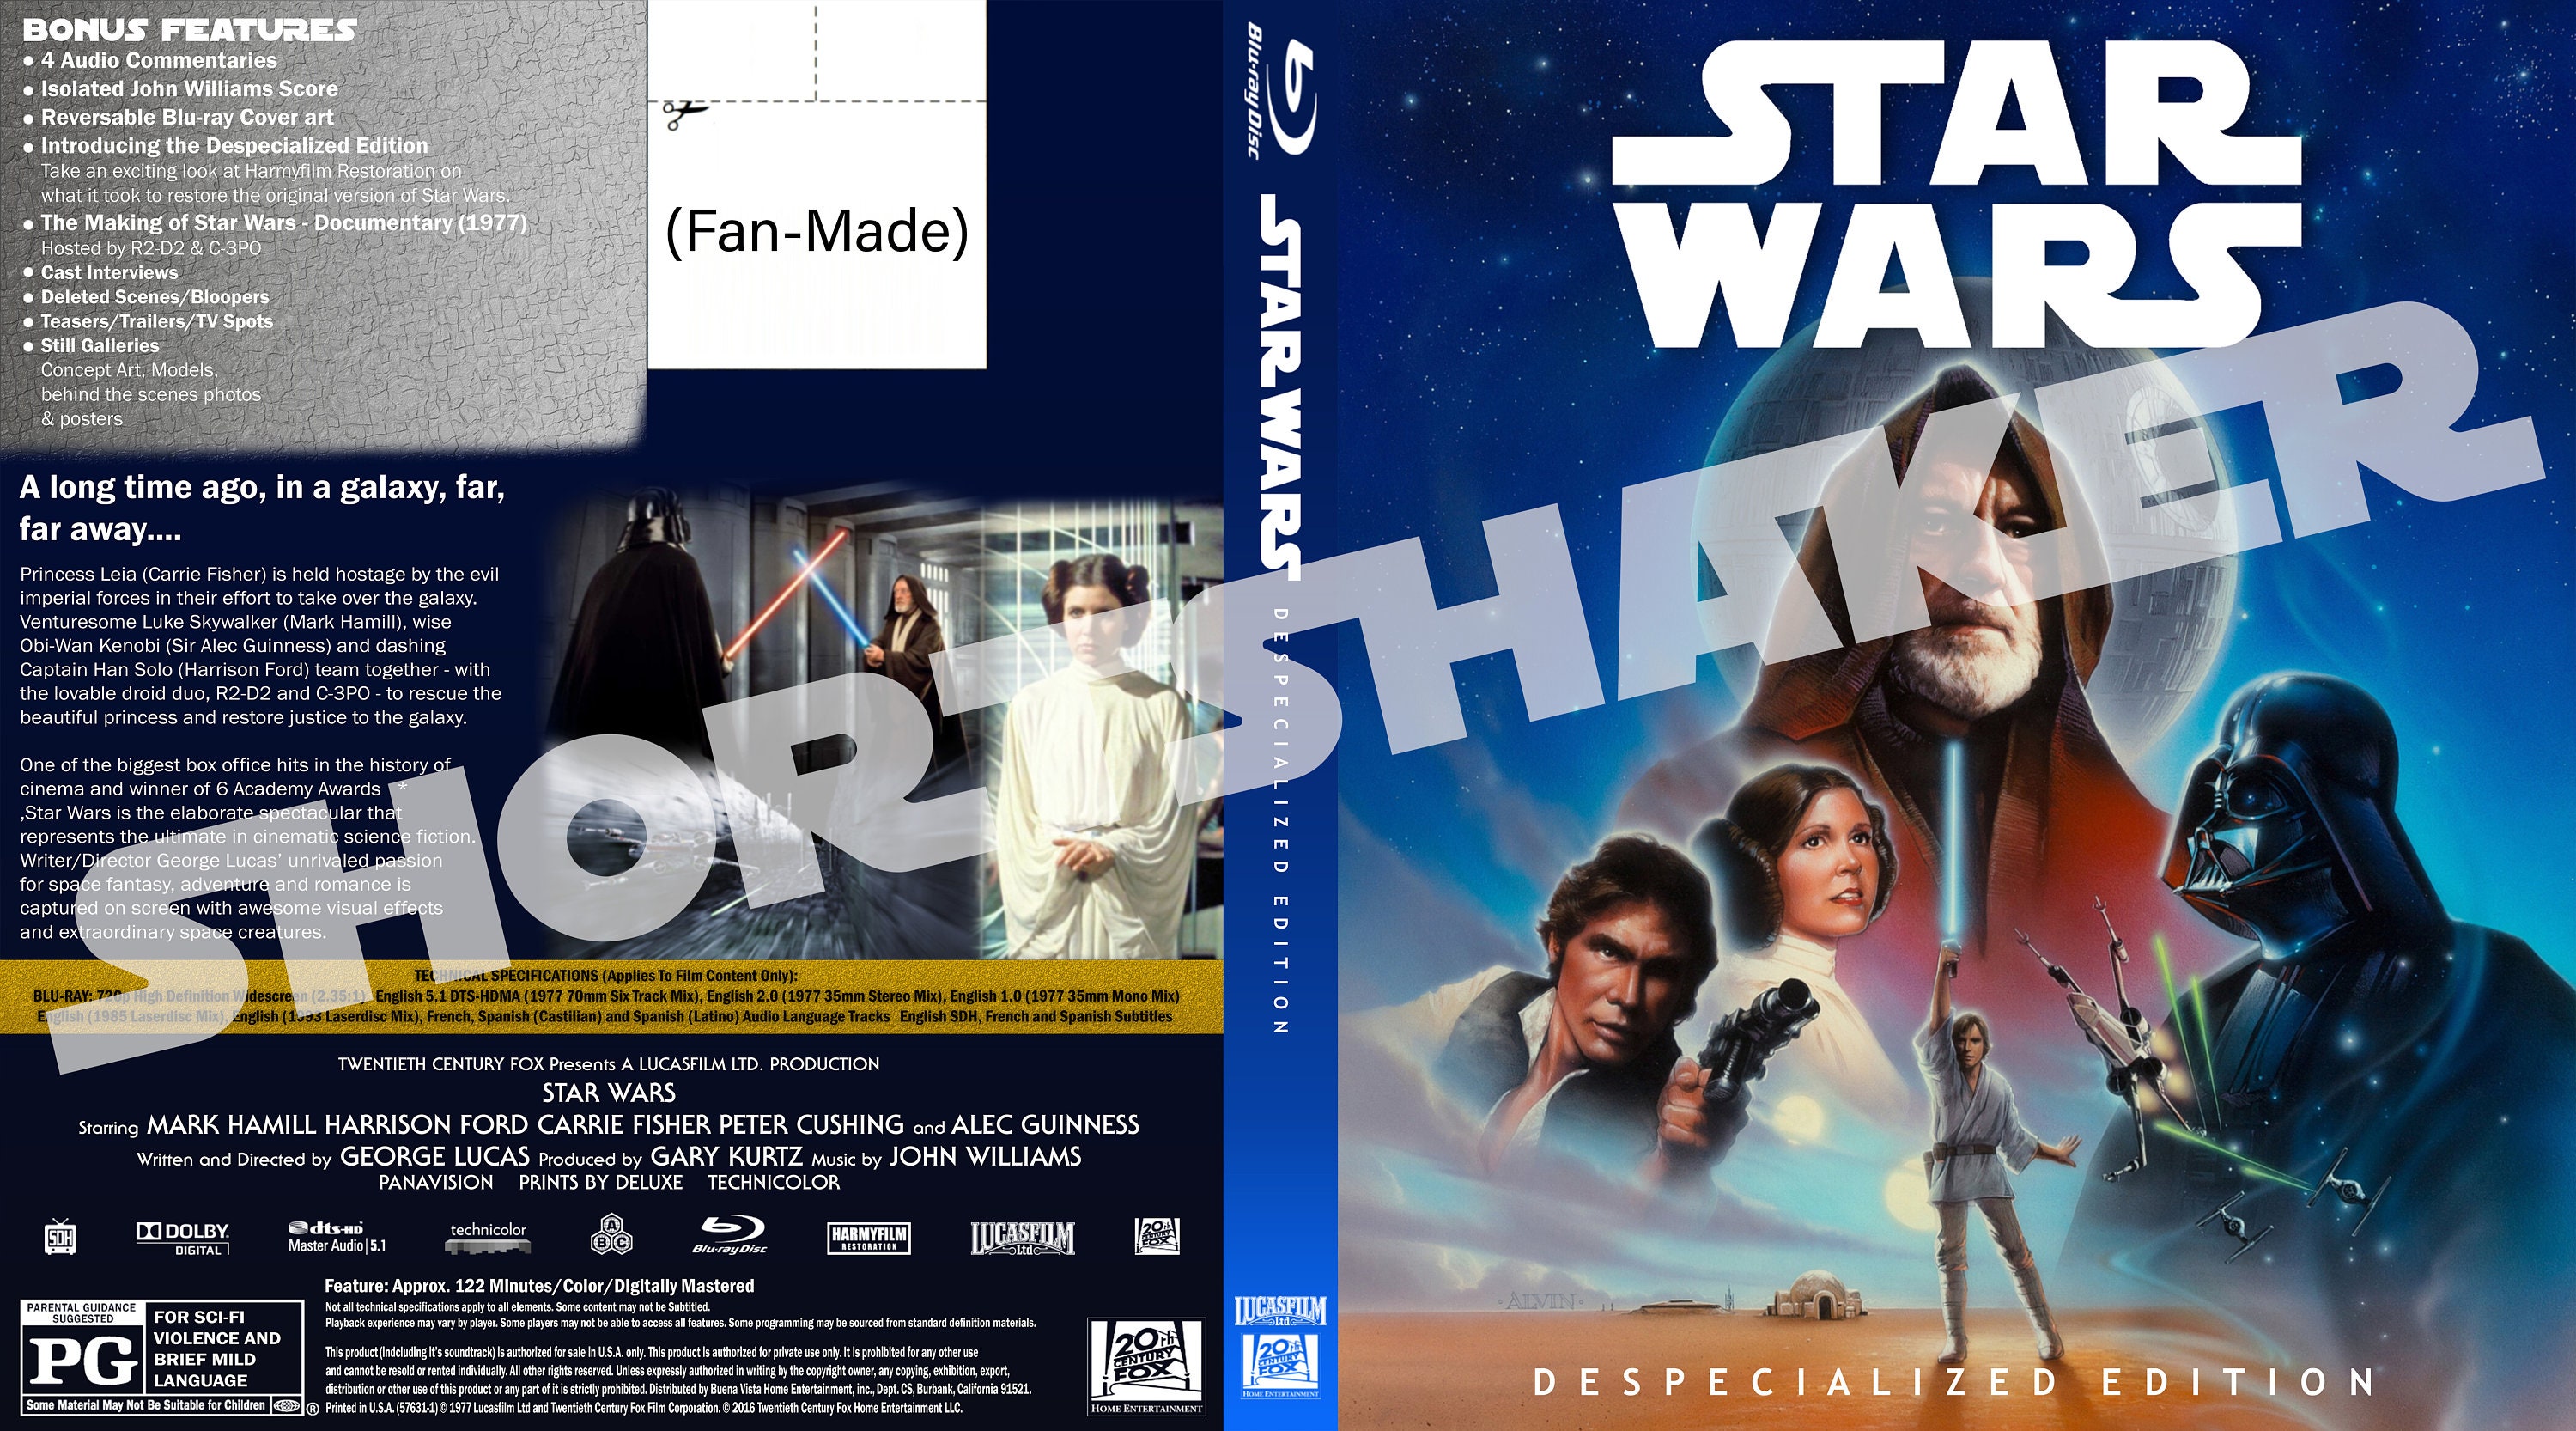 Star Wars: A New Hope [Includes Digital Copy] [Blu-ray] [1977] - Best Buy